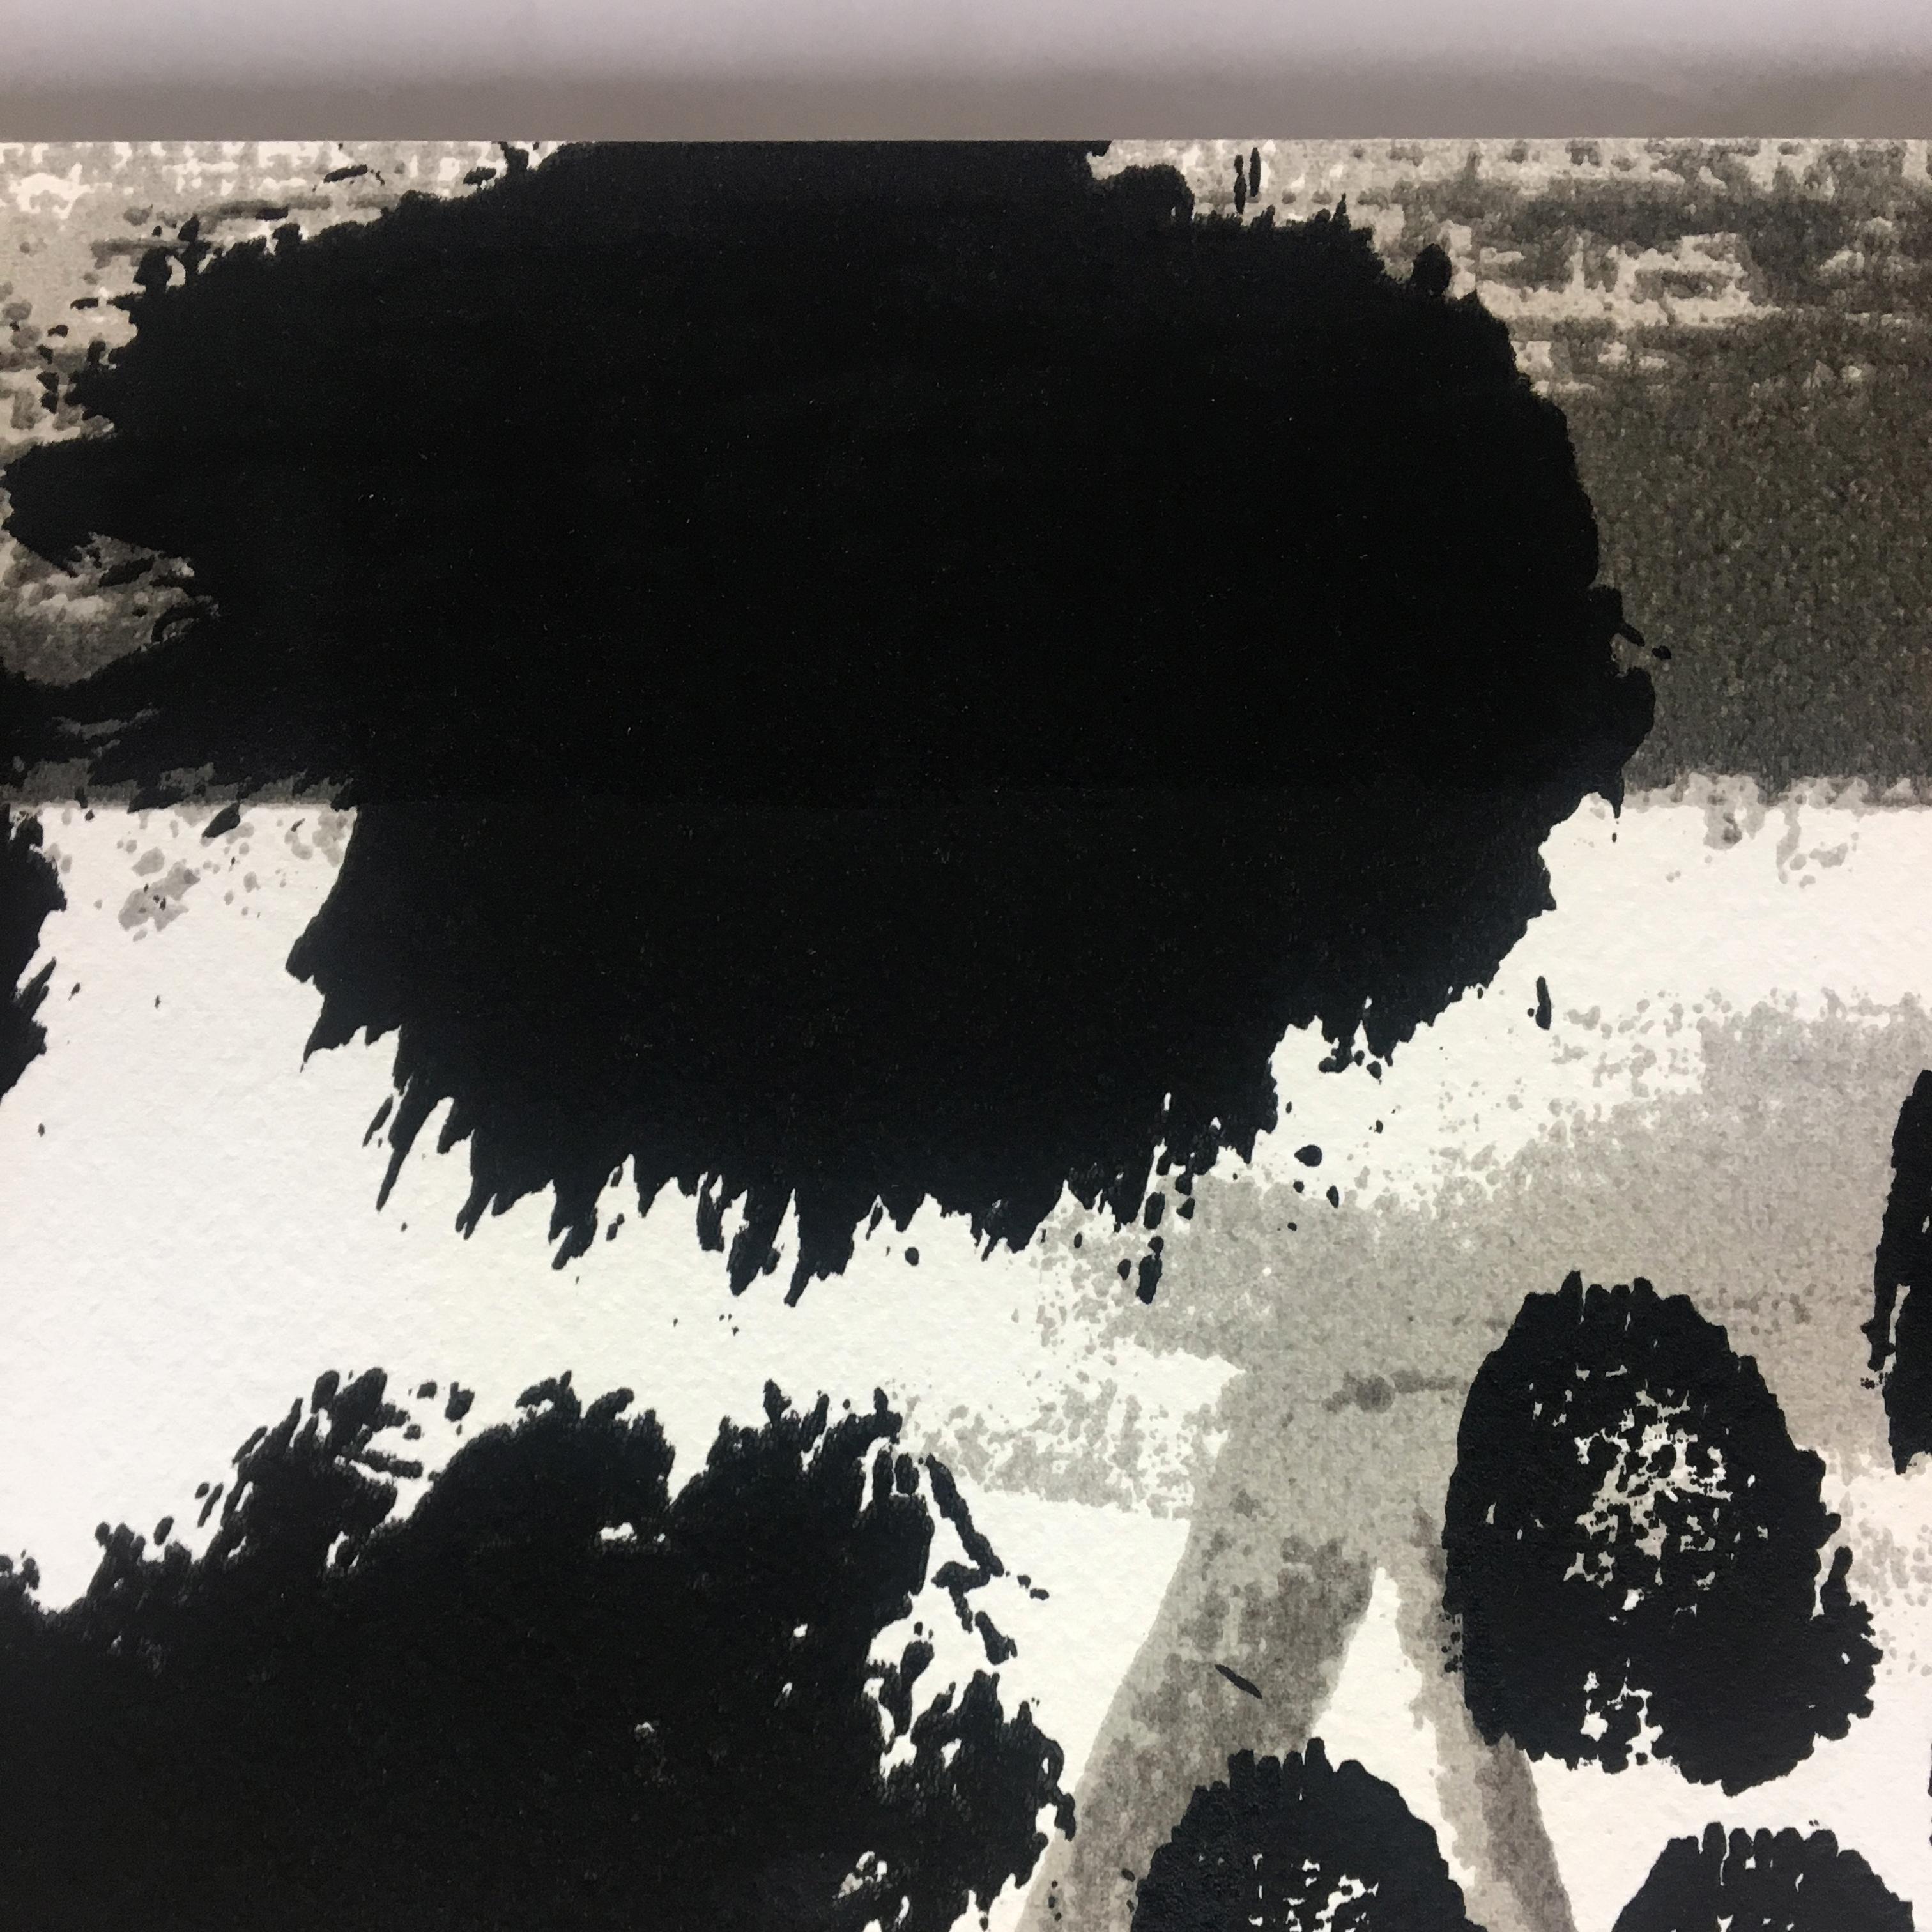 Souvenir, Howard Hodgkin: large scale black white gray abstract interior scene  For Sale 4